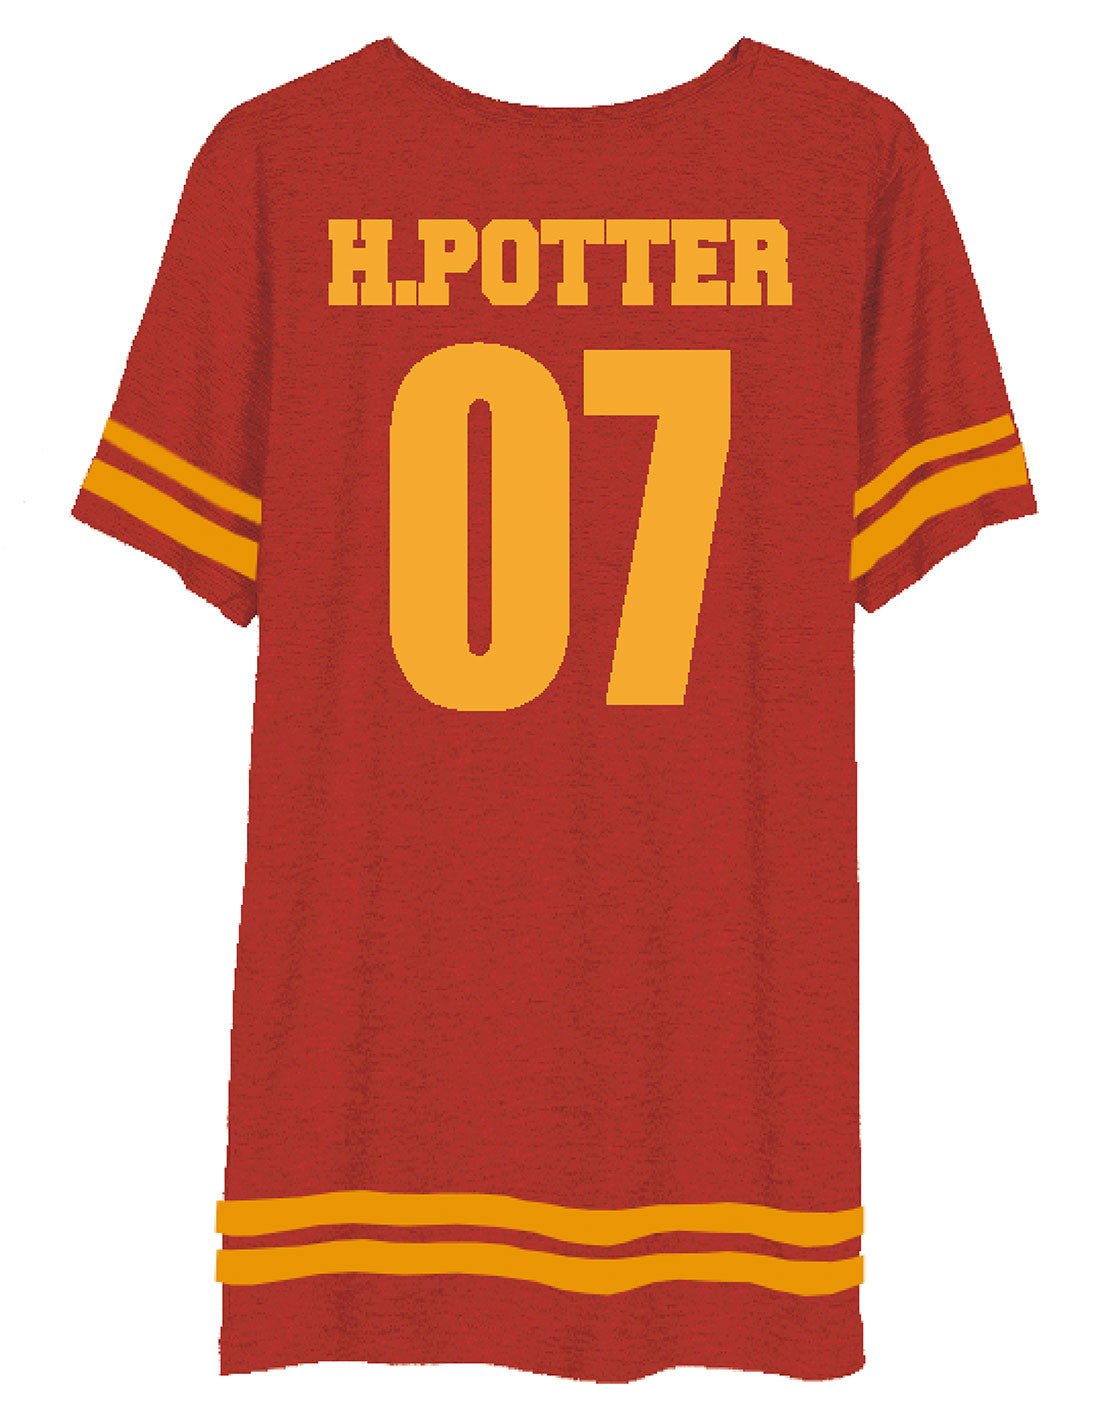 Big Tee-shirt Femme Harry Potter - Harry Potter College